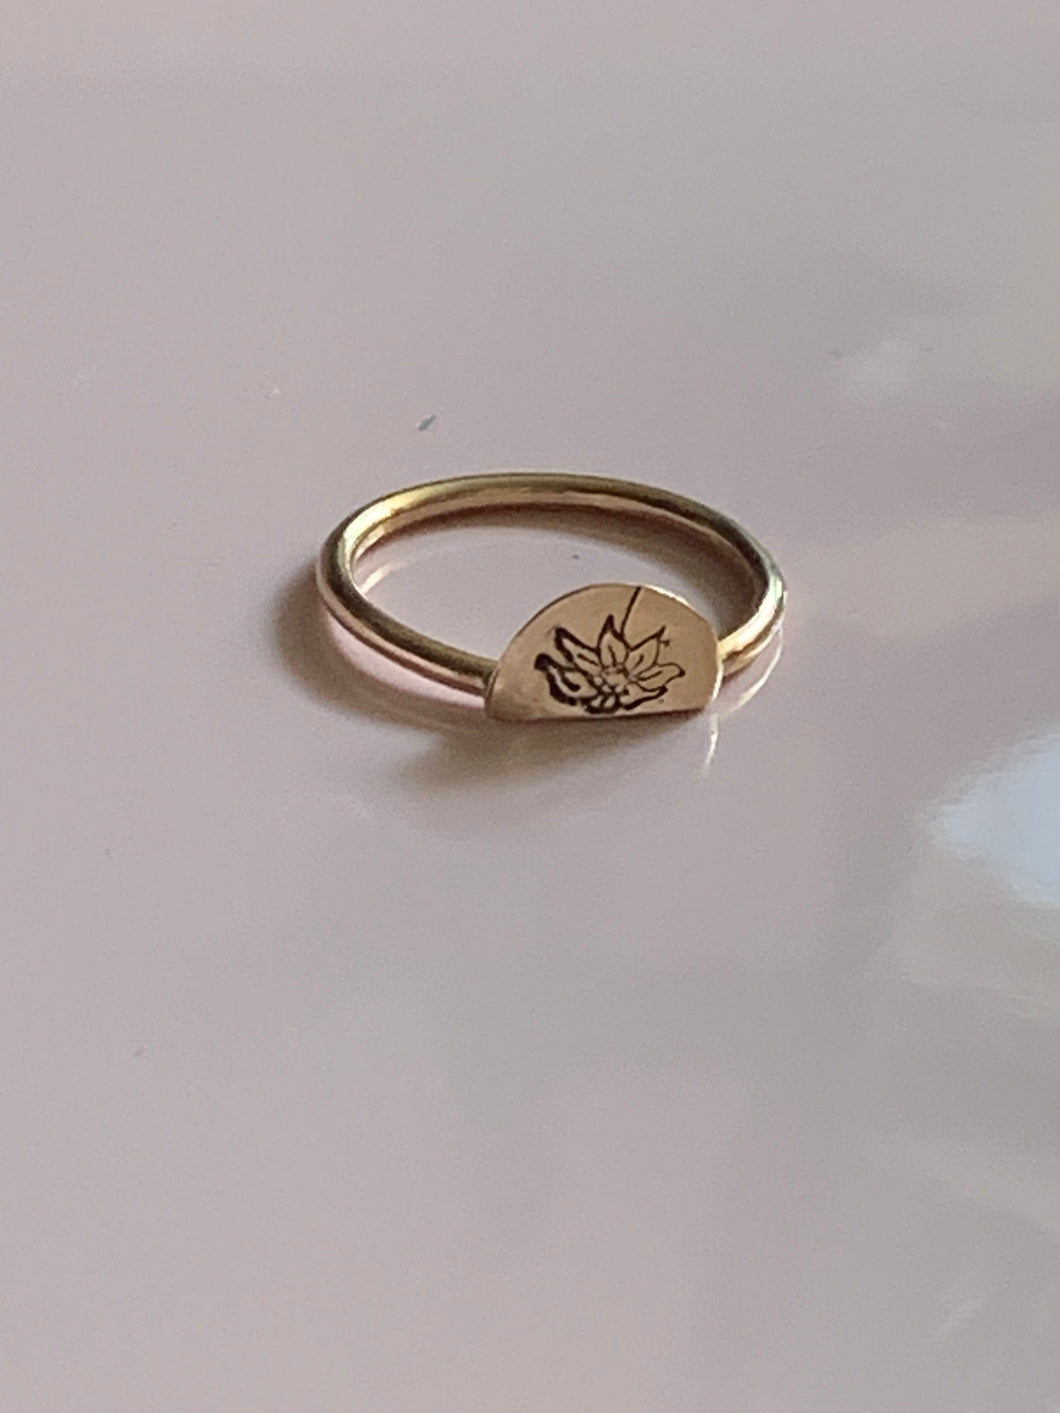 December/poinsettia Gold filled birth flower ring